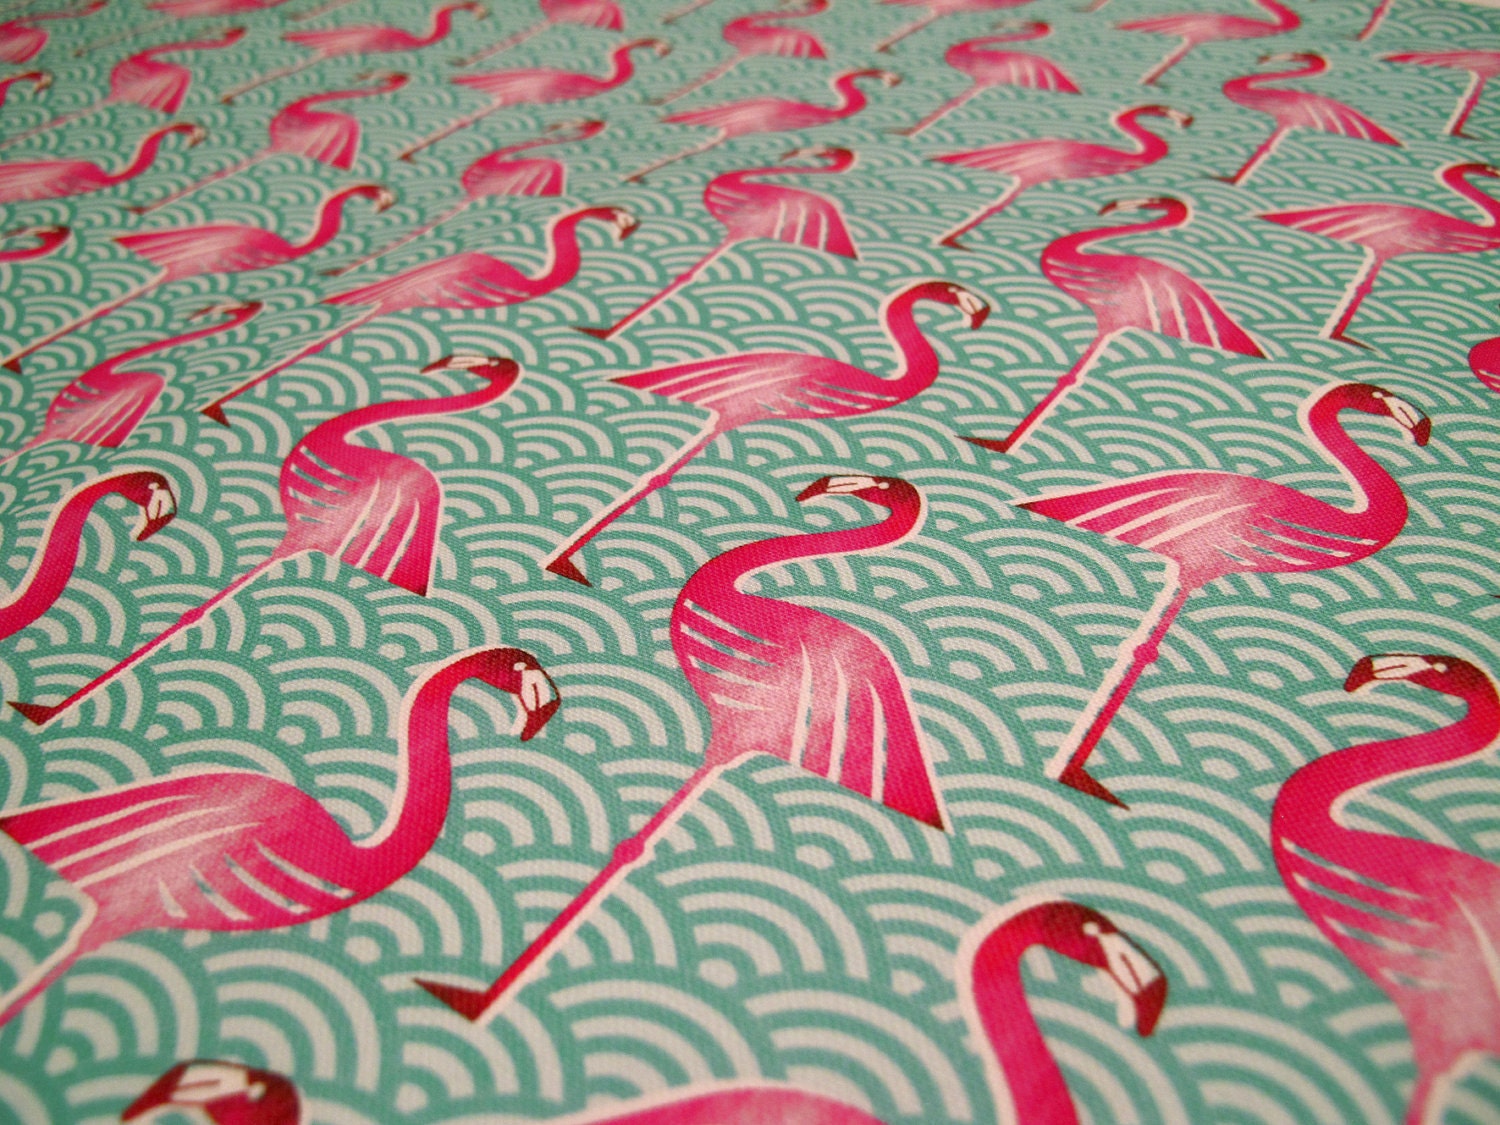 Pink Flamingo cushion cover